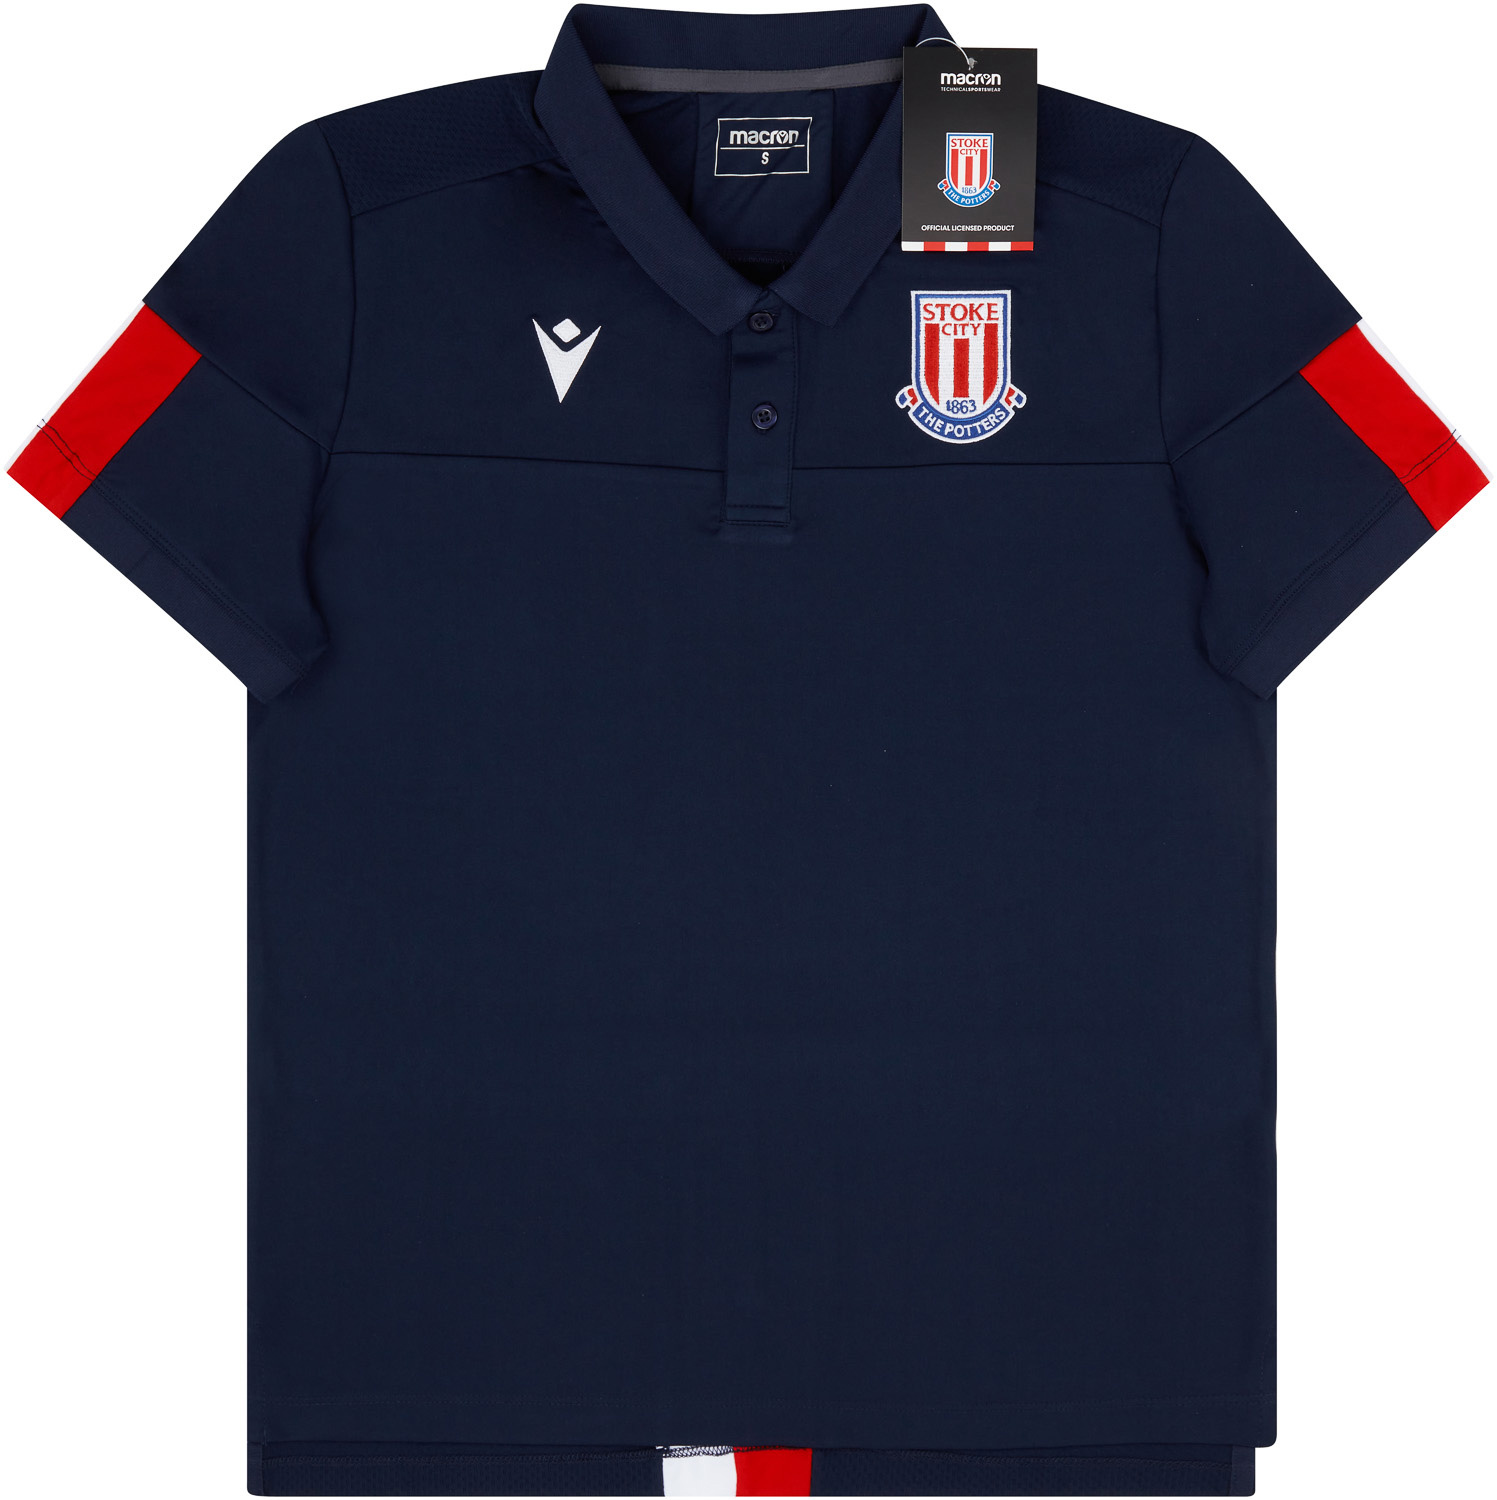 2019-20 Stoke City Macron Staff Polo T-Shirt - NEW - S